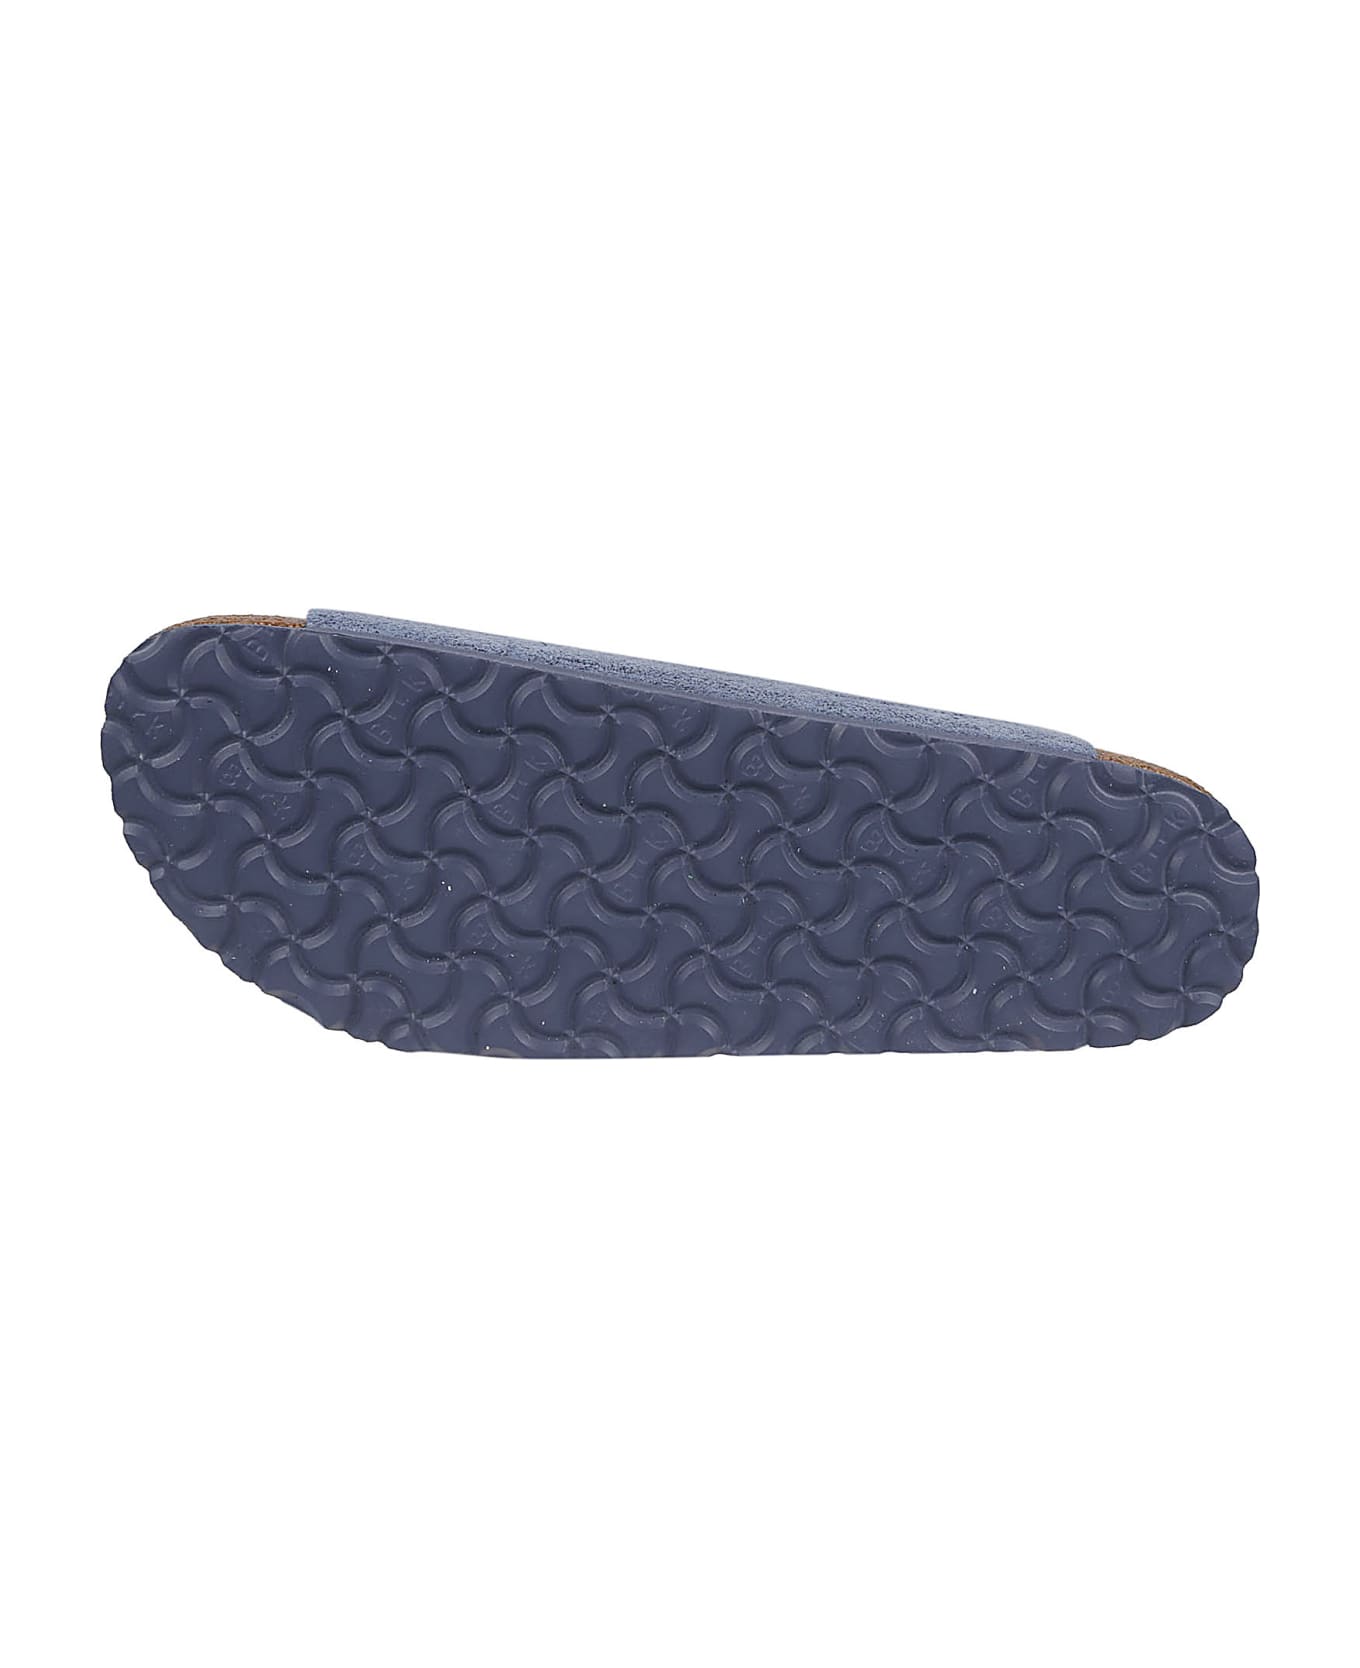 Birkenstock Arizona Sandals - Elemental Blue